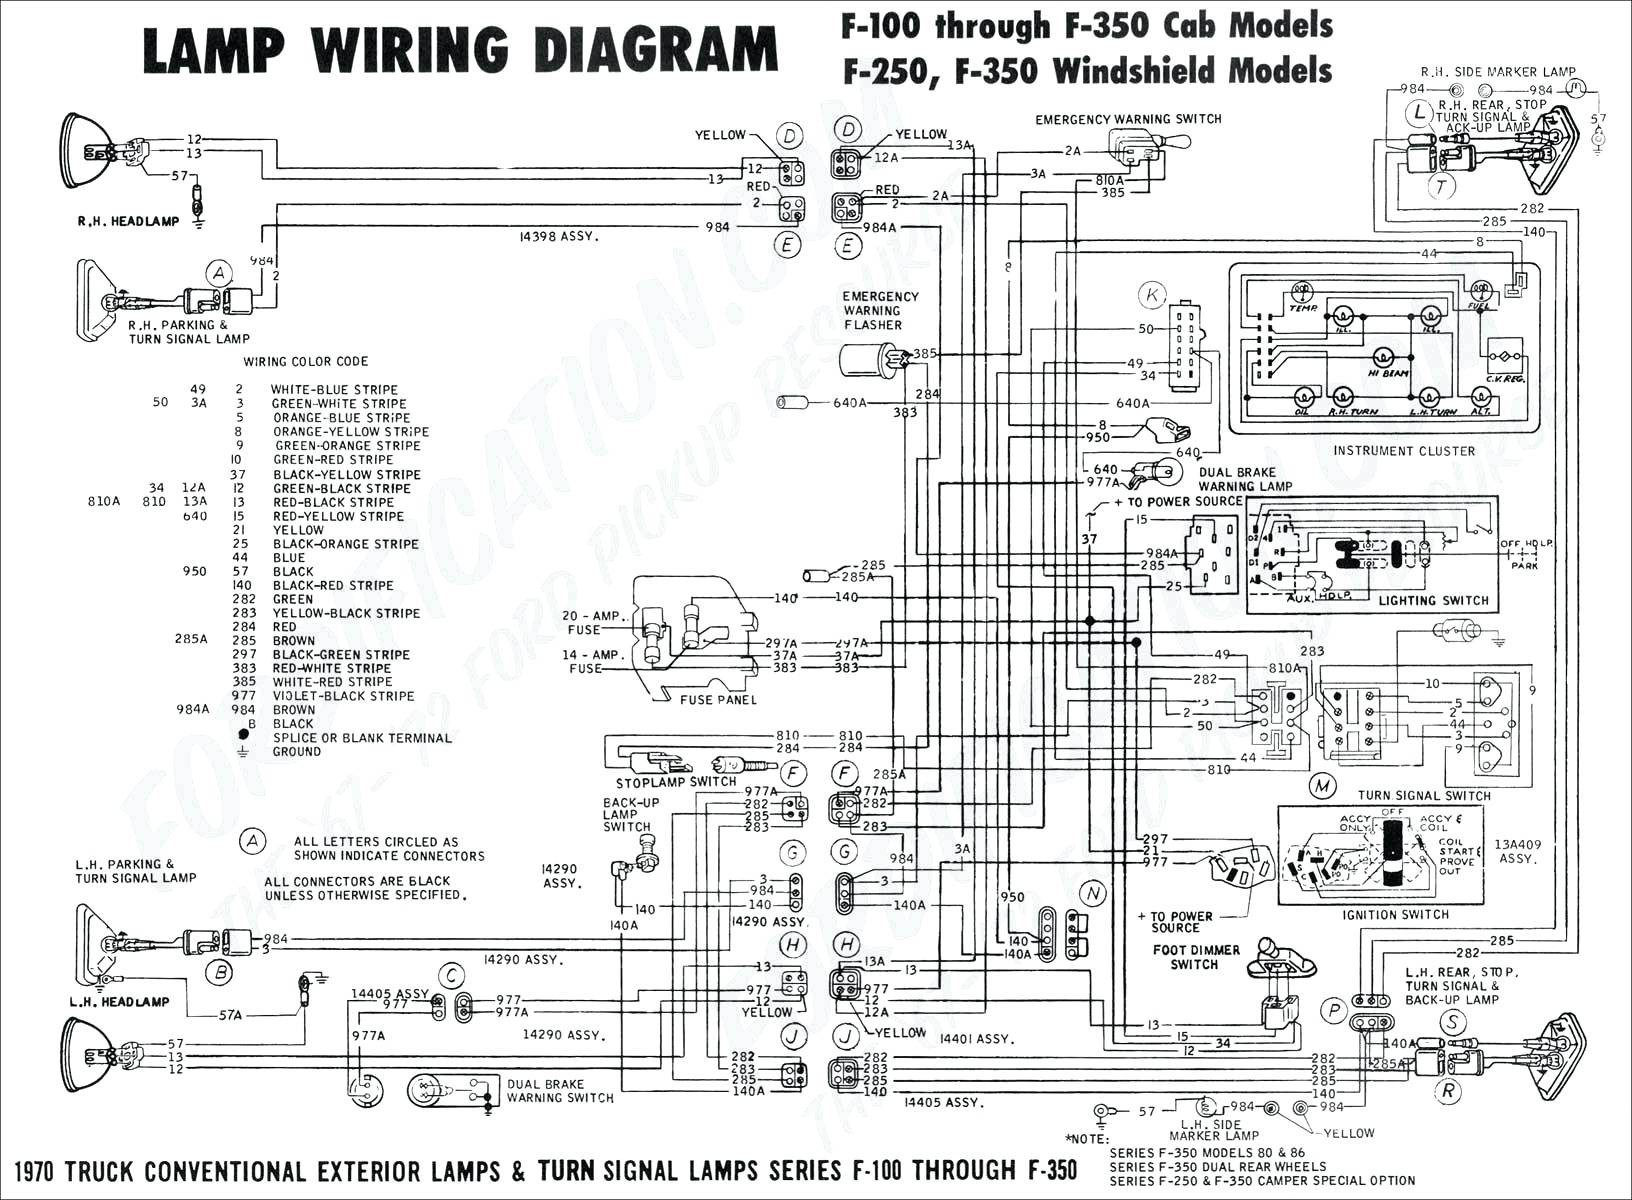 1996 ford Windstar Engine Diagram 3f1f9 Jeep Wrangler Wiring Diagram Yj Pinterest Of 1996 ford Windstar Engine Diagram